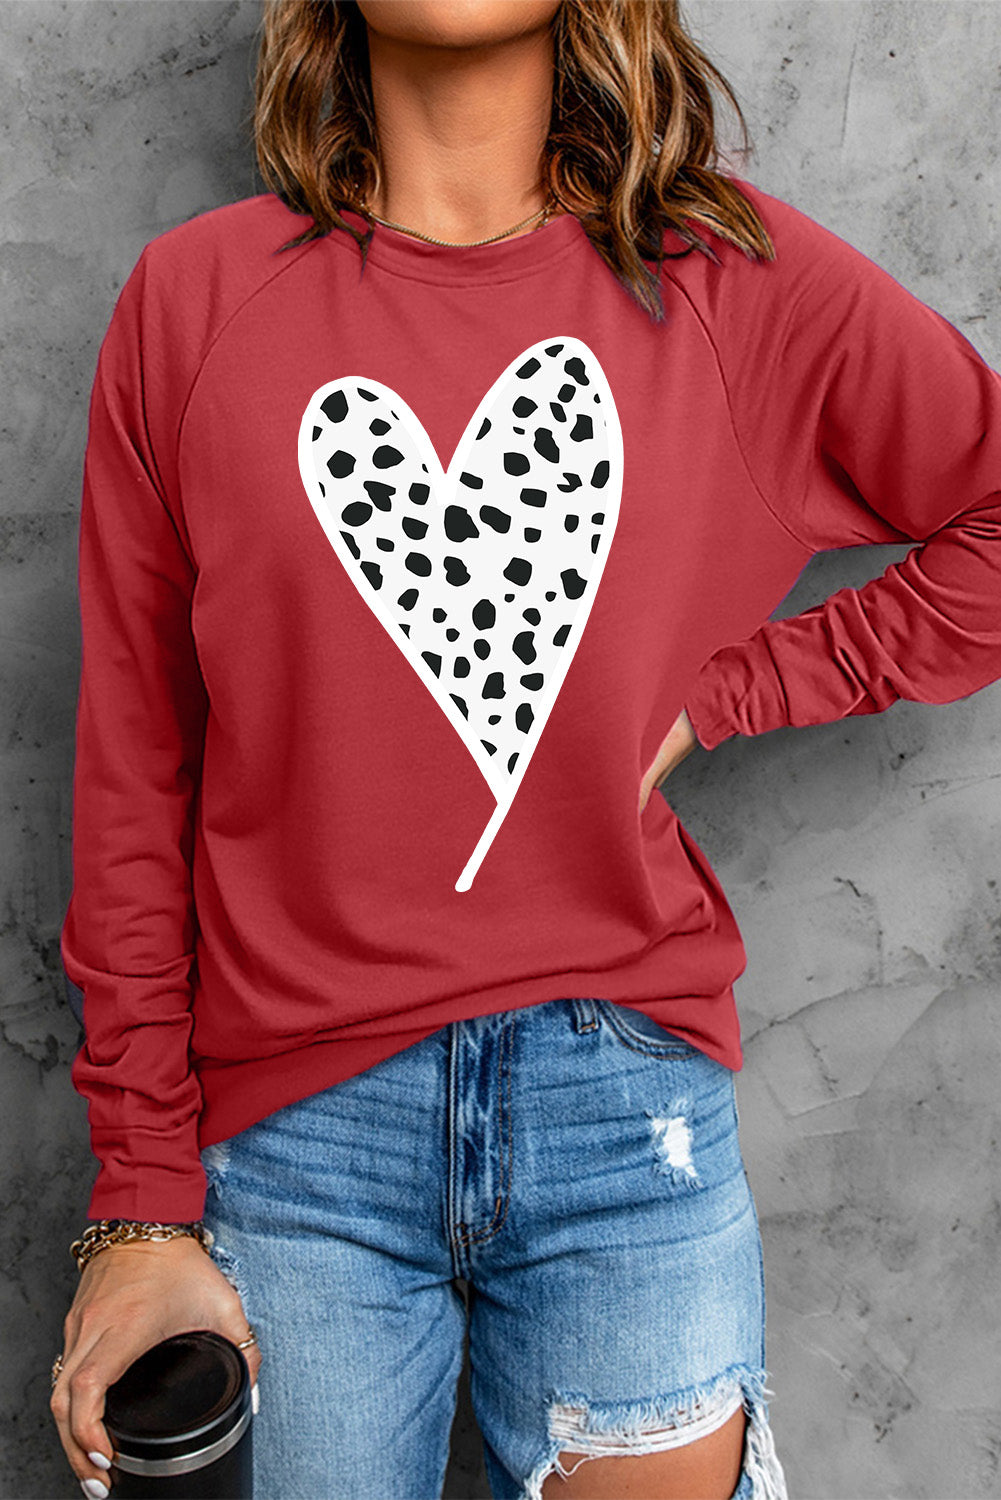 Red Cheath Heart Graphic Pullover Sweatshirt